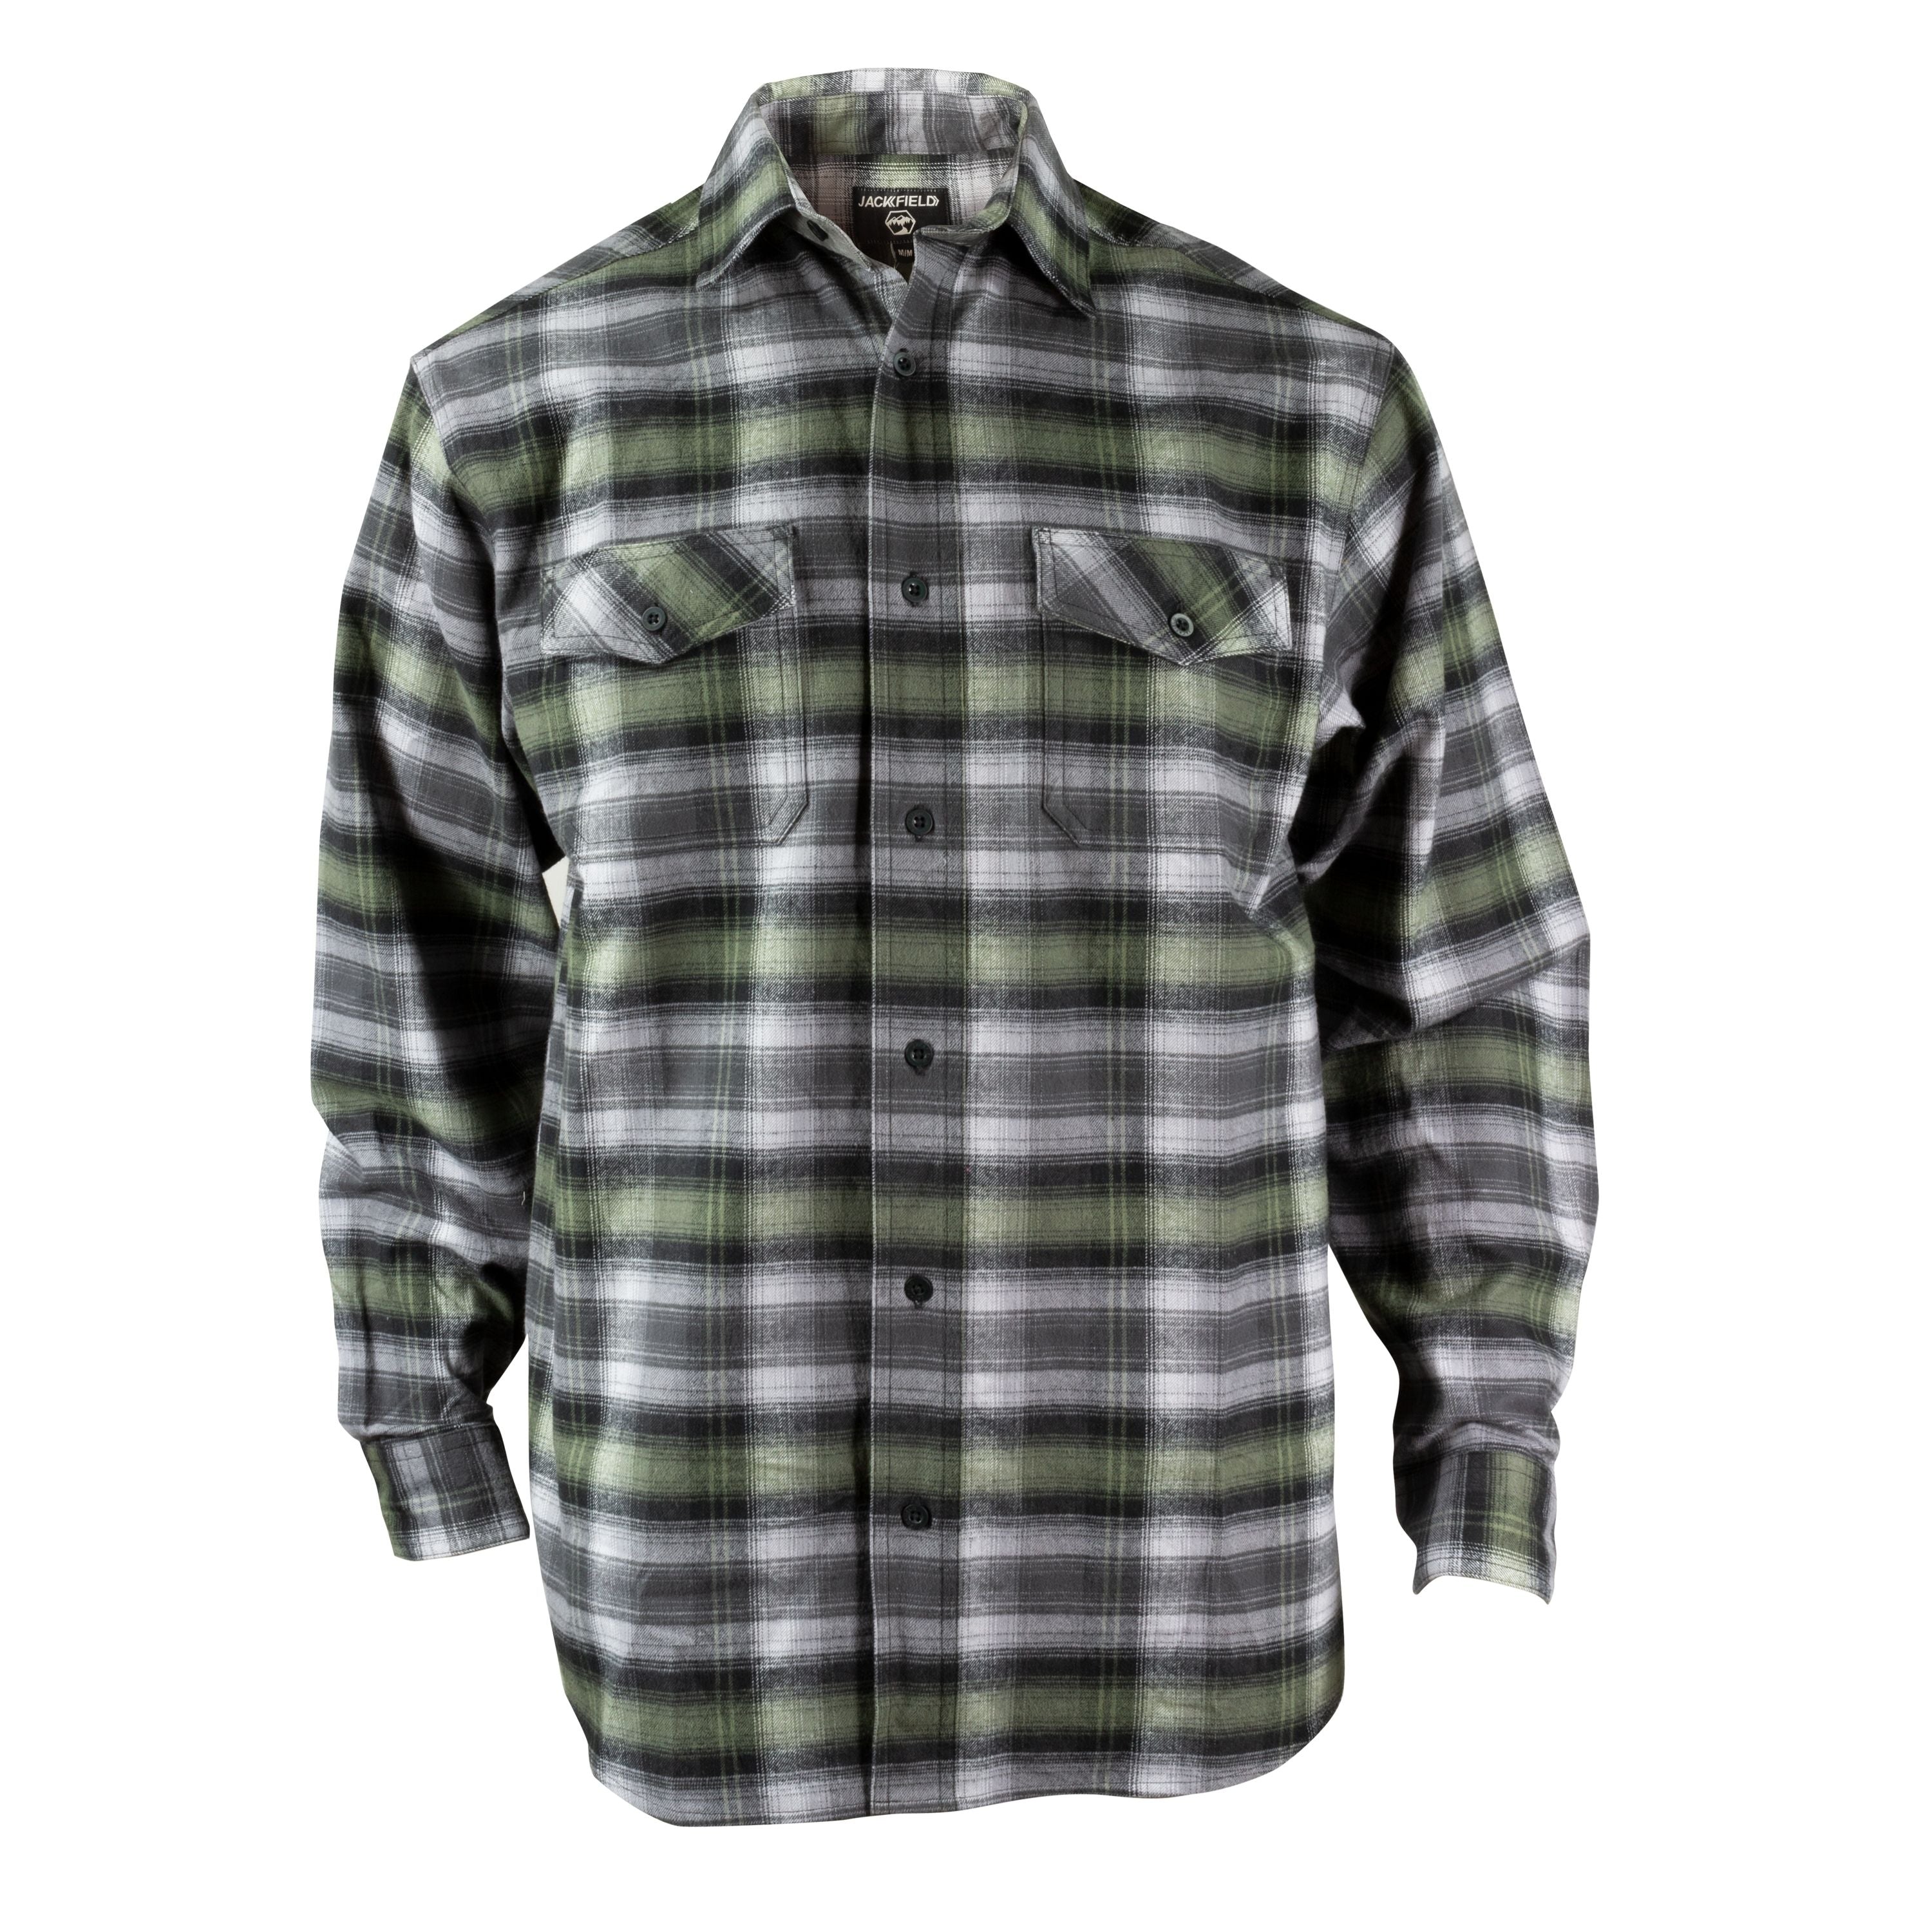 "Urban" Flannel shirt - Men's